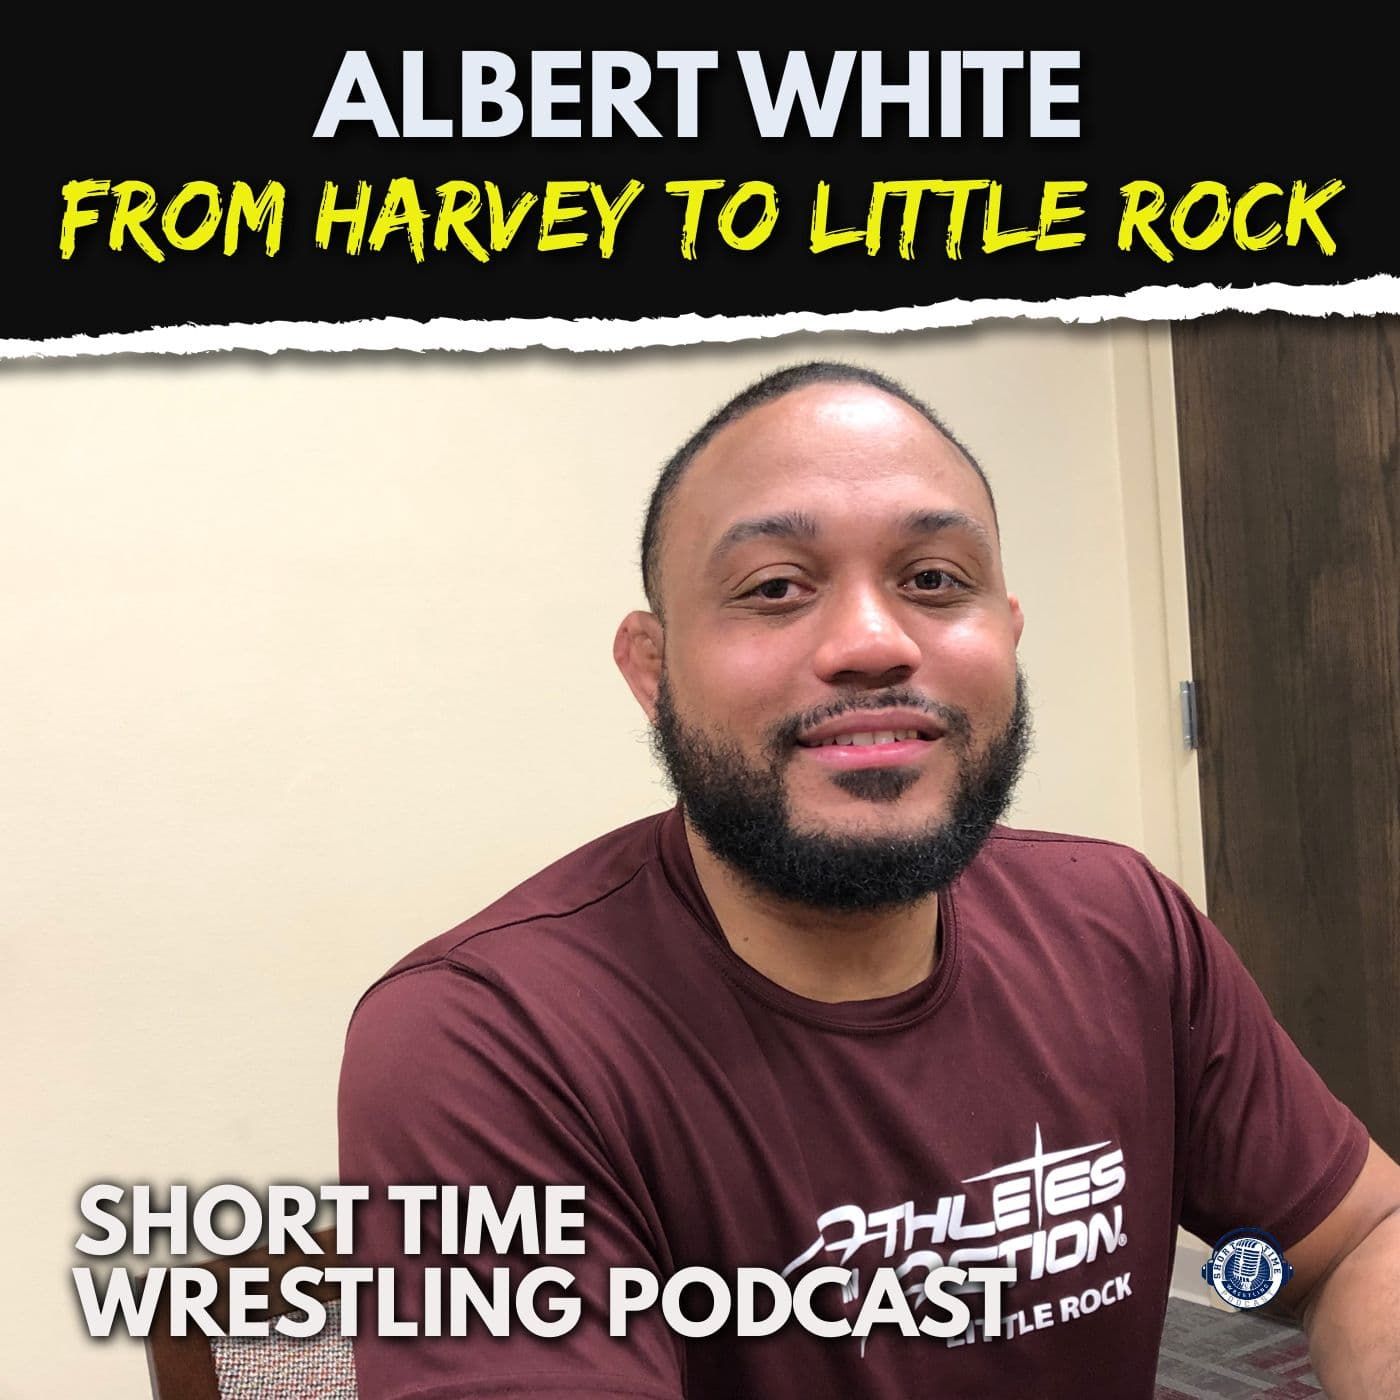 Albert White’s journey from Harvey Twister to Little Rock Trojan